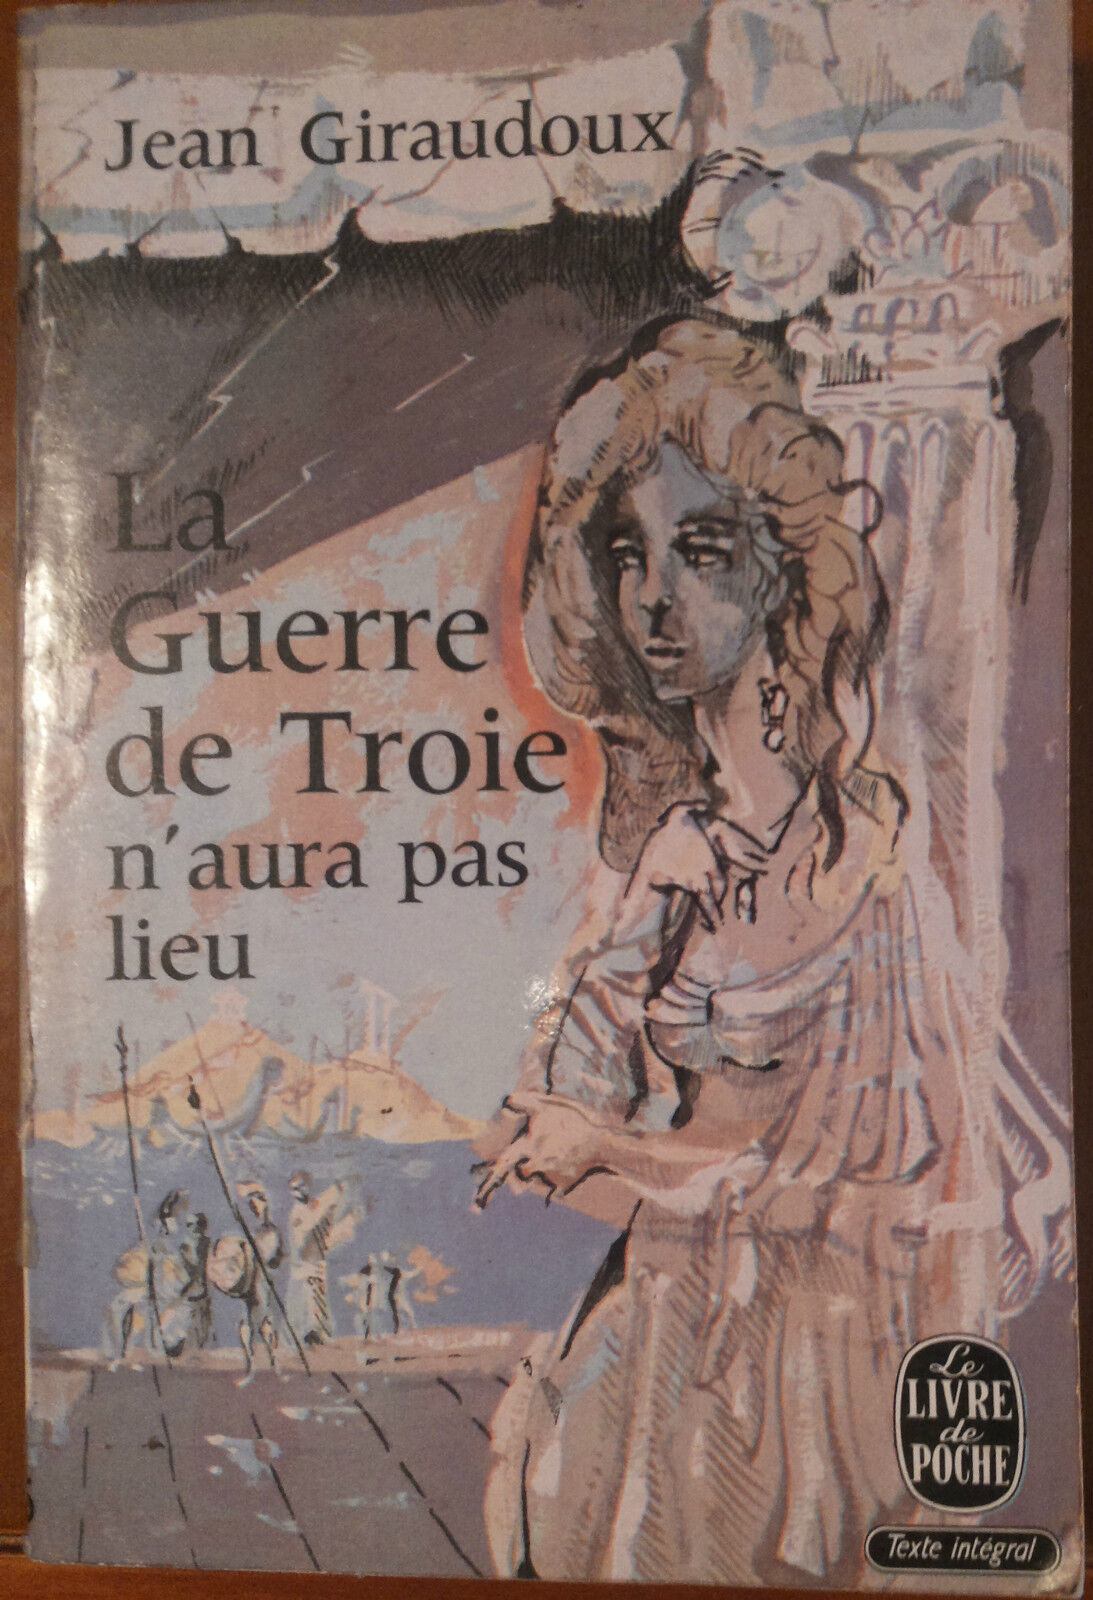 La guerre de Troie - Jean Giraudoux - Bernard Grasset,1935 - A